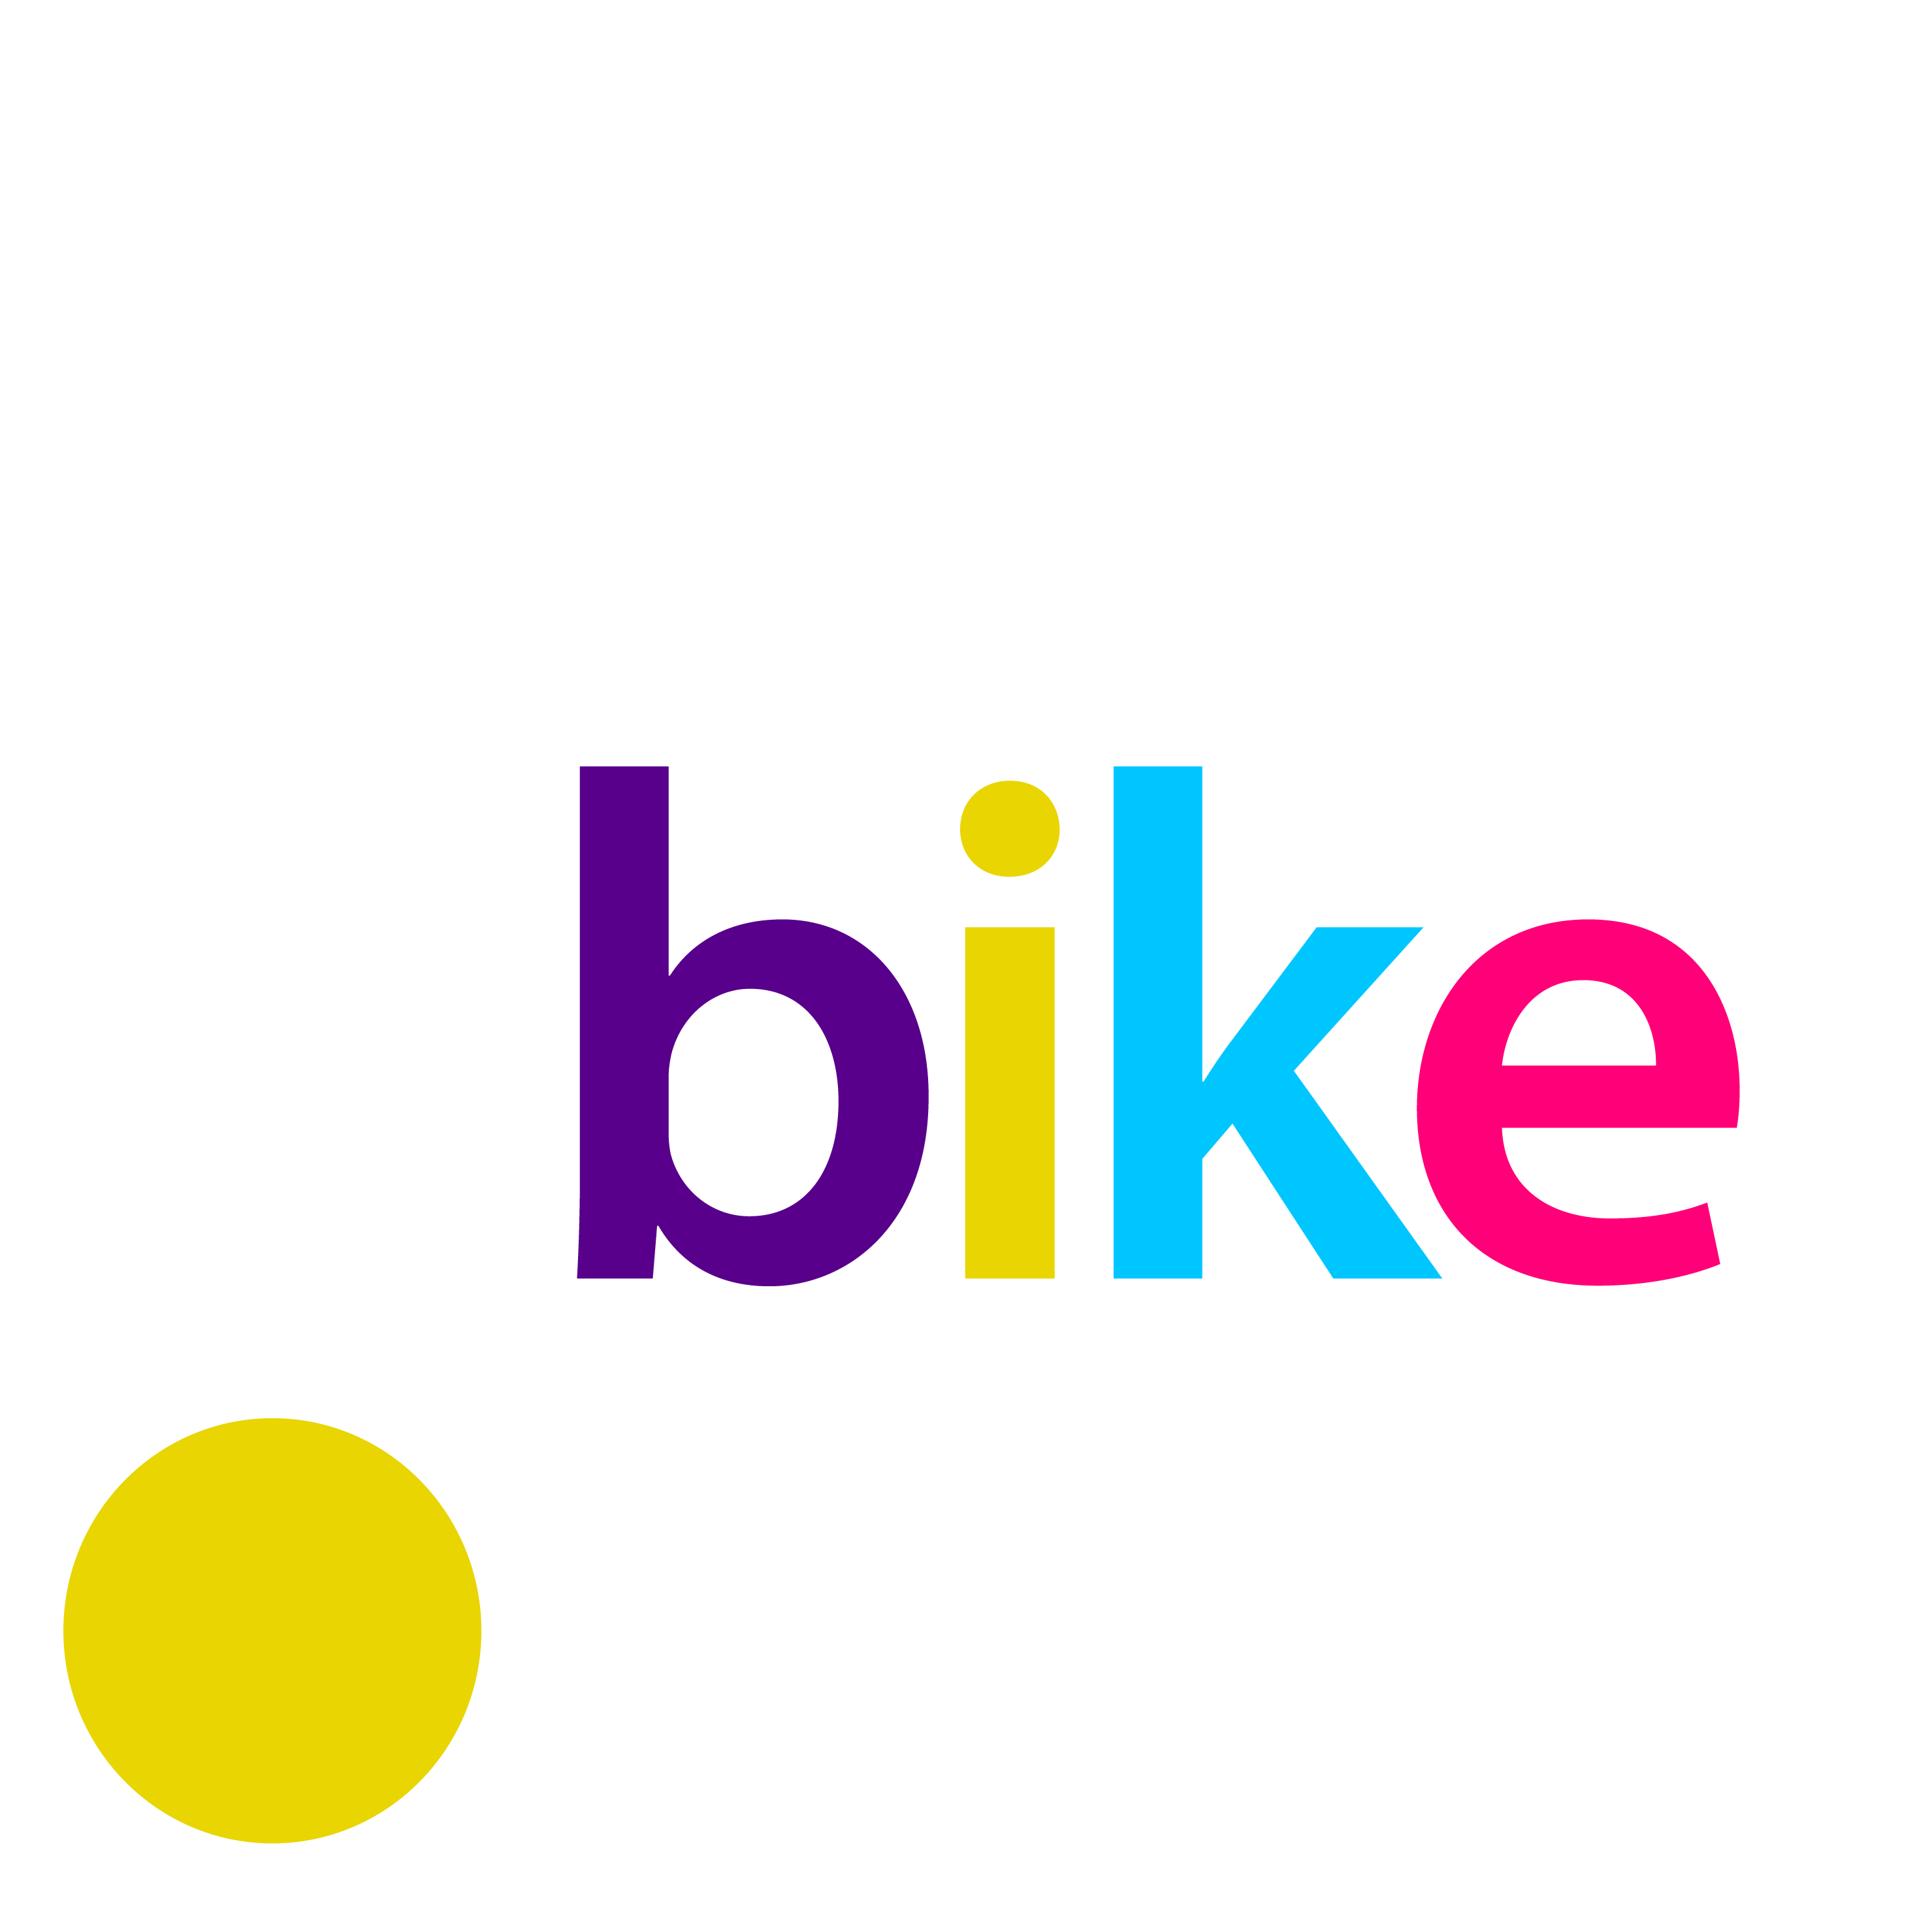 Bike İzmir